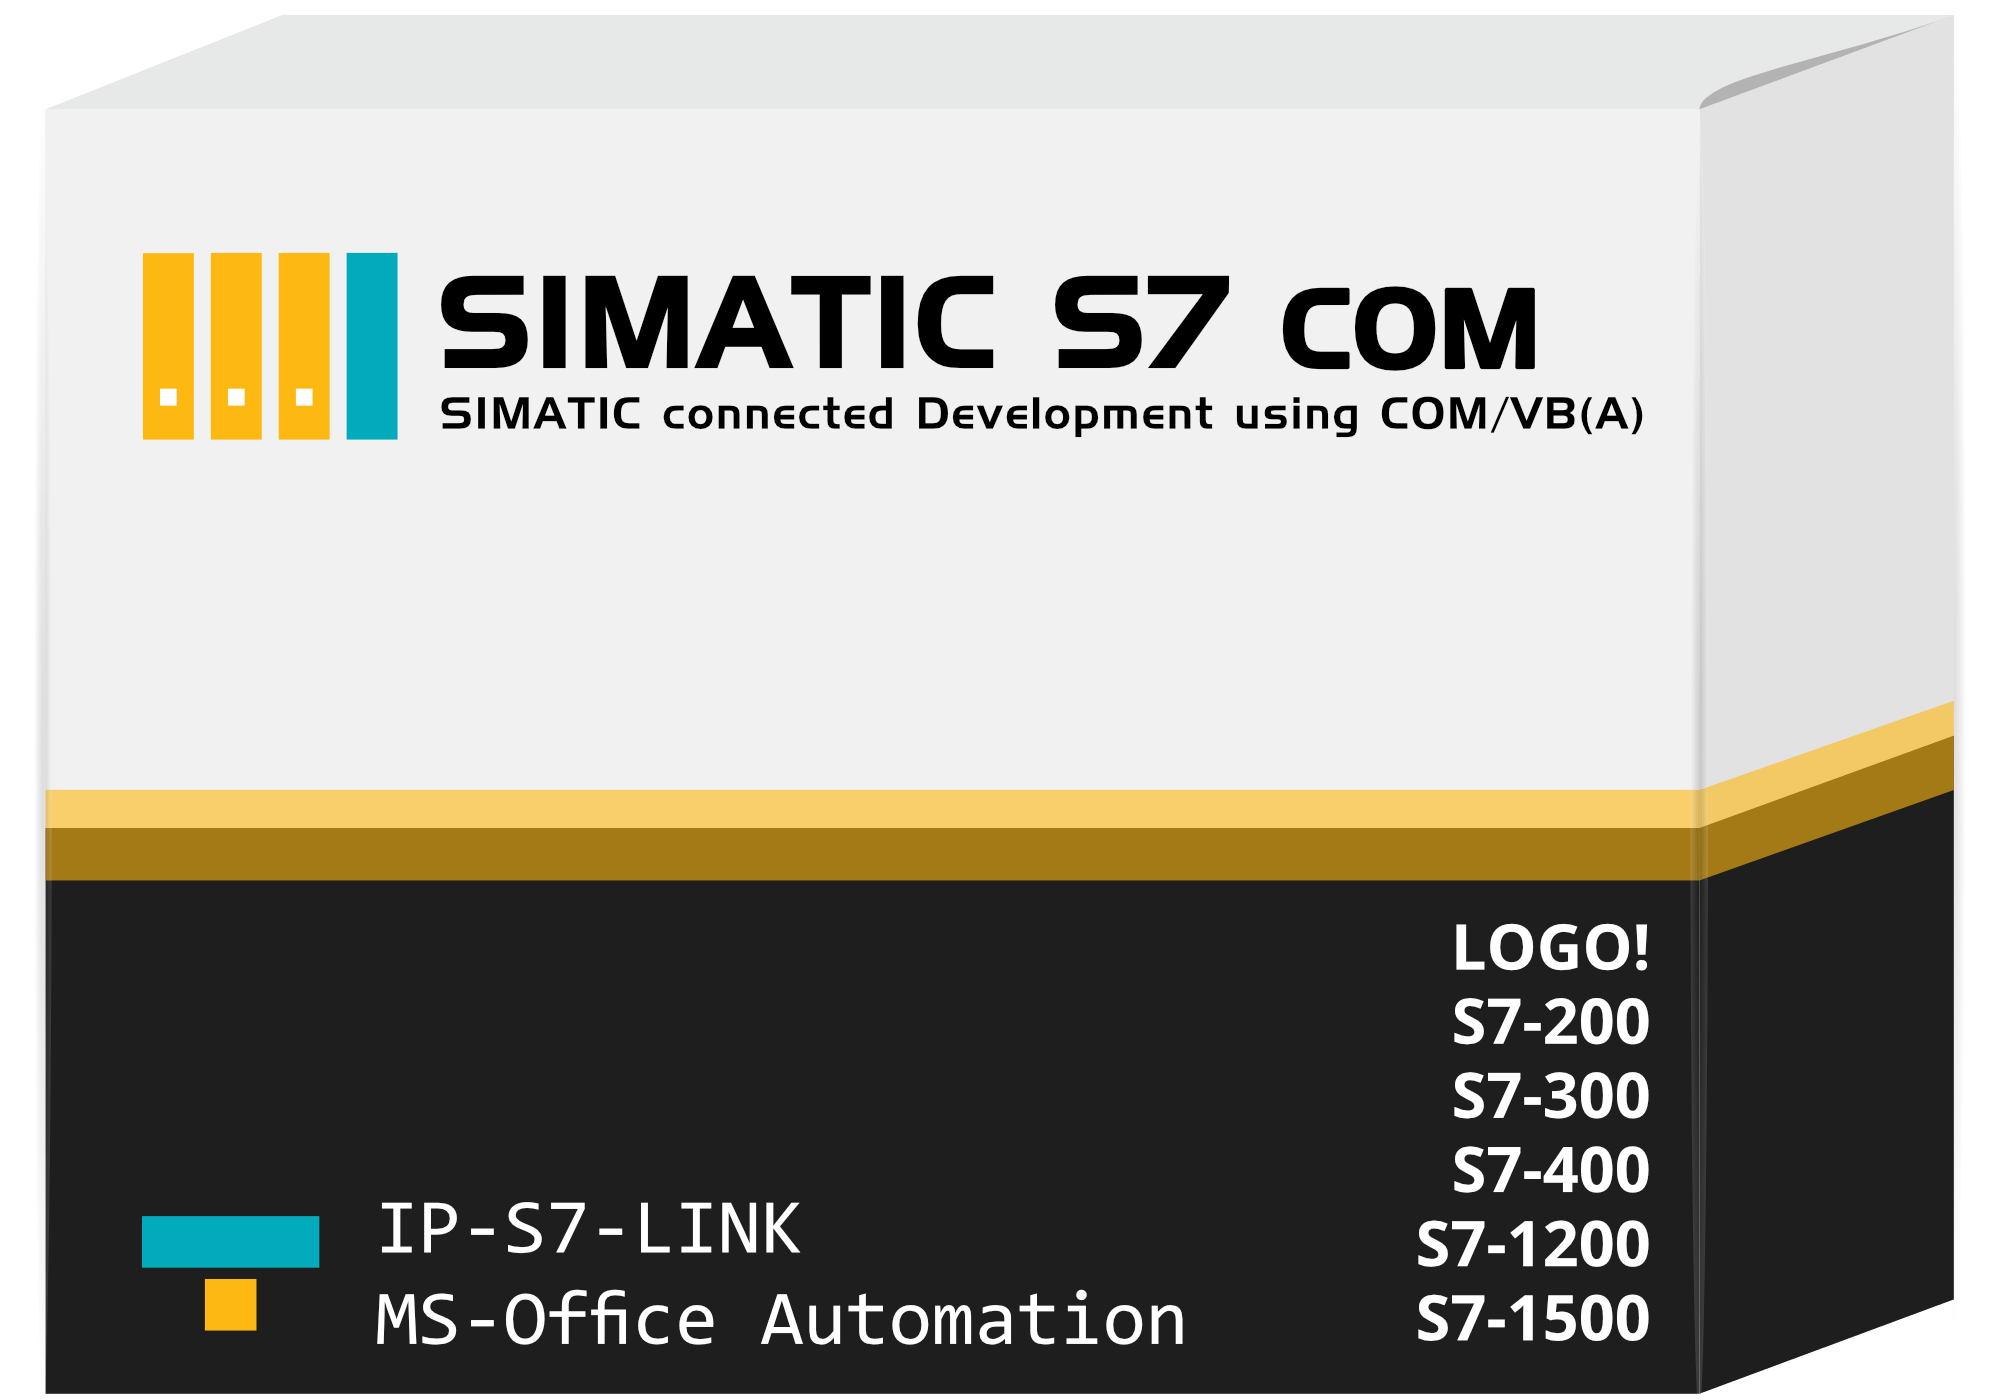 Icon for "SIMATIC S7 COM SDK – for all COM environments".